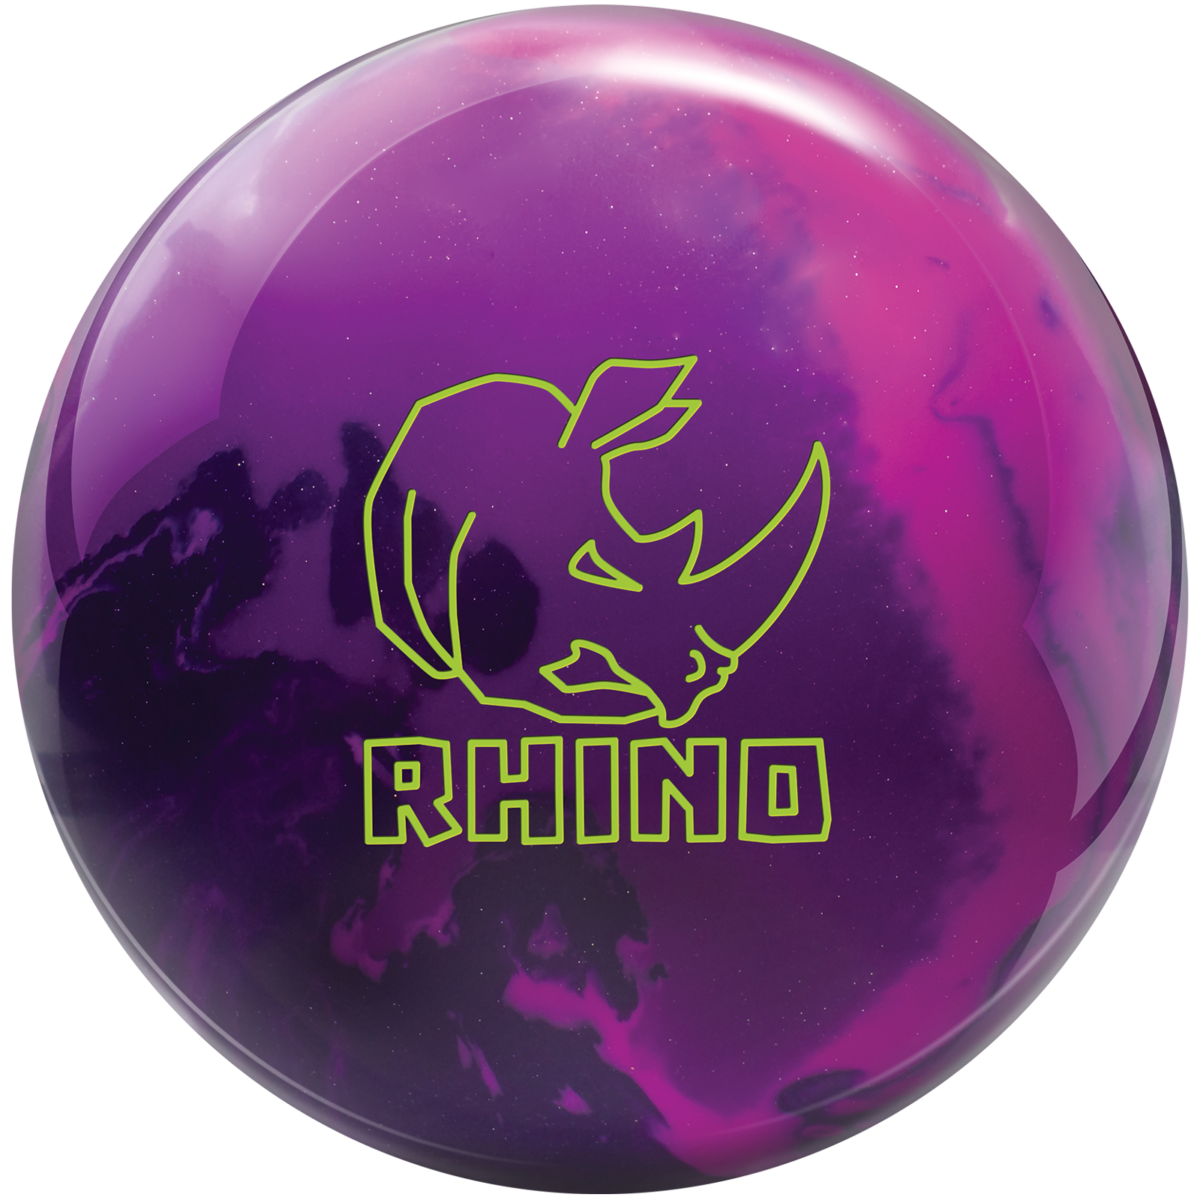 Brunswick Rhino 10 LB Red Black Gold Bowling Ball NIB 1st Quality 